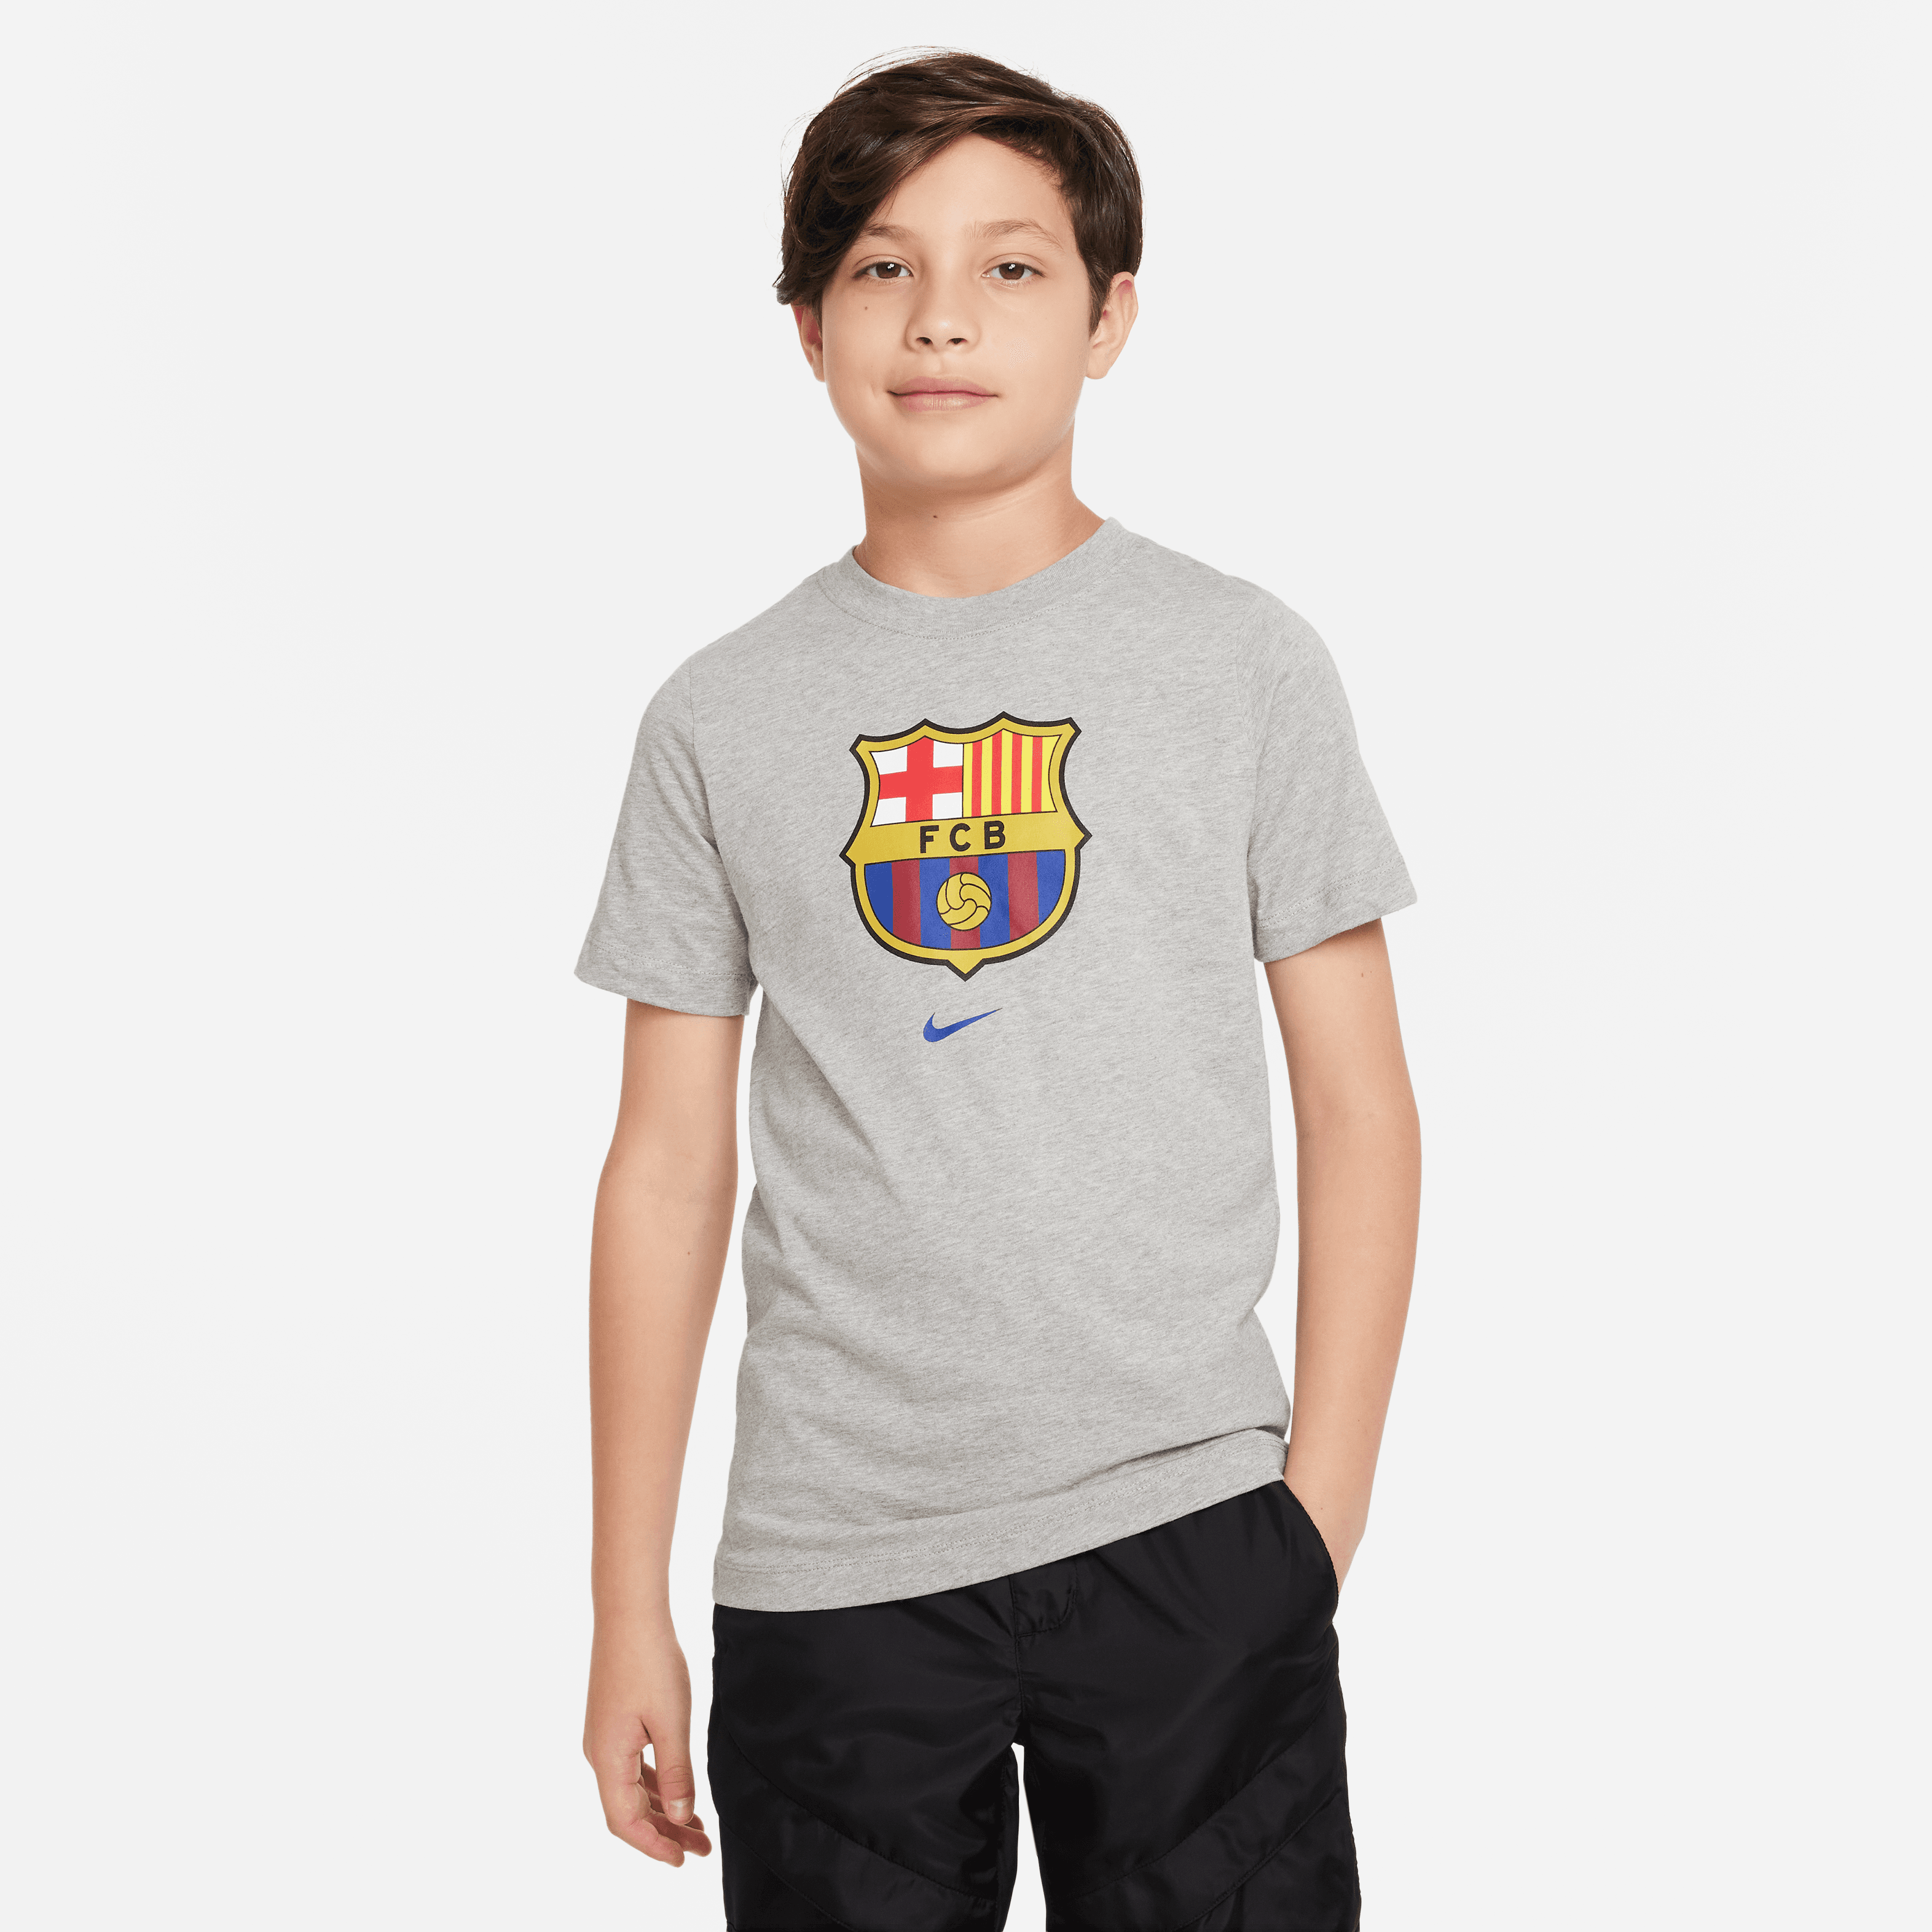 Nike Youth FC Barcelona Crest T-Shirt-Grey